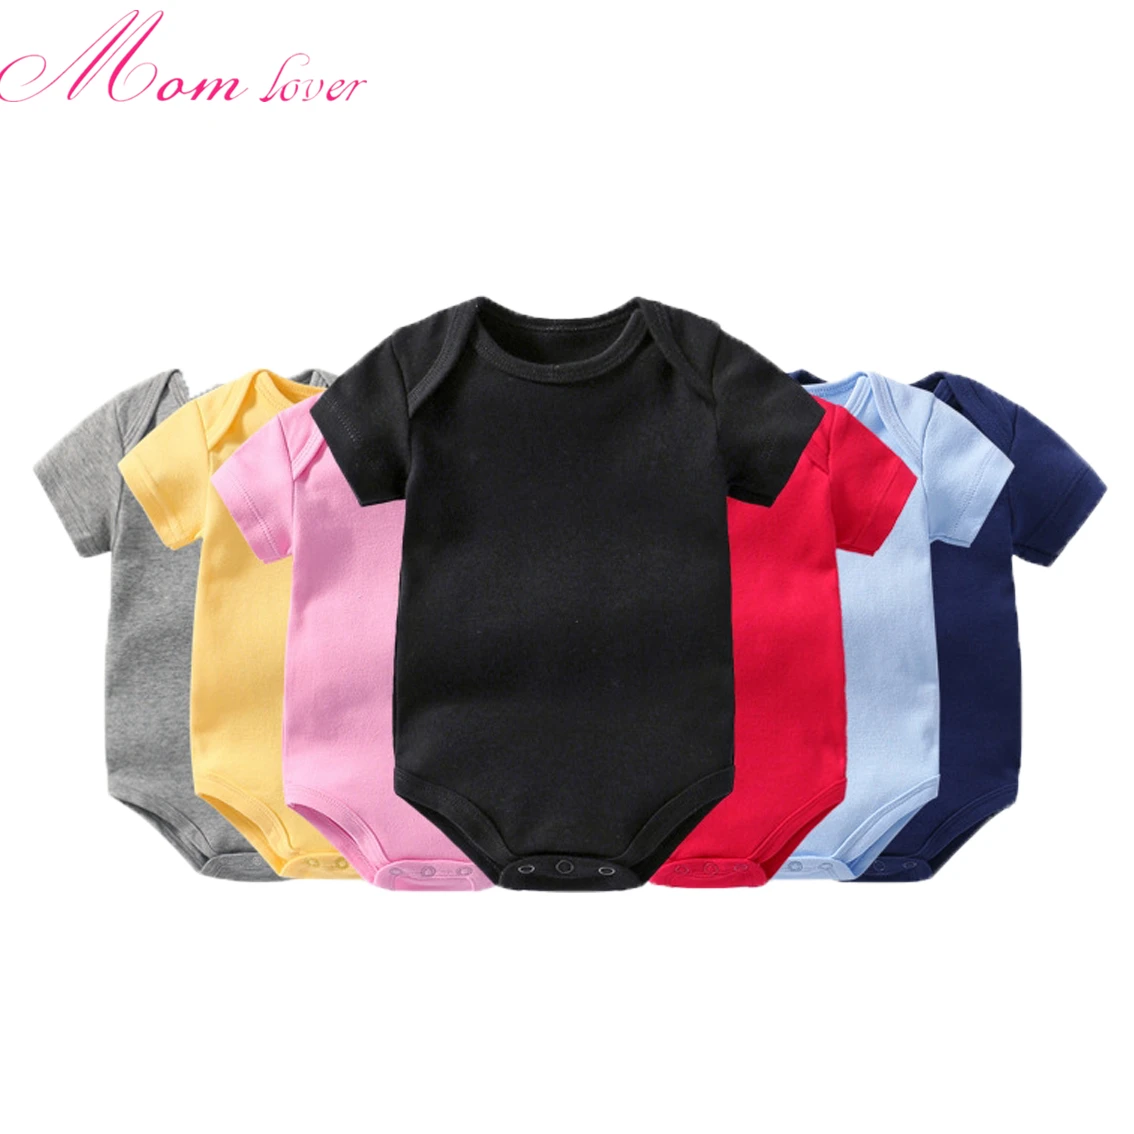 

wholesale onesie baby clothes romper plain custom printing short sleeve gender neutral blank 100% organic cotton baby onesie, Picture